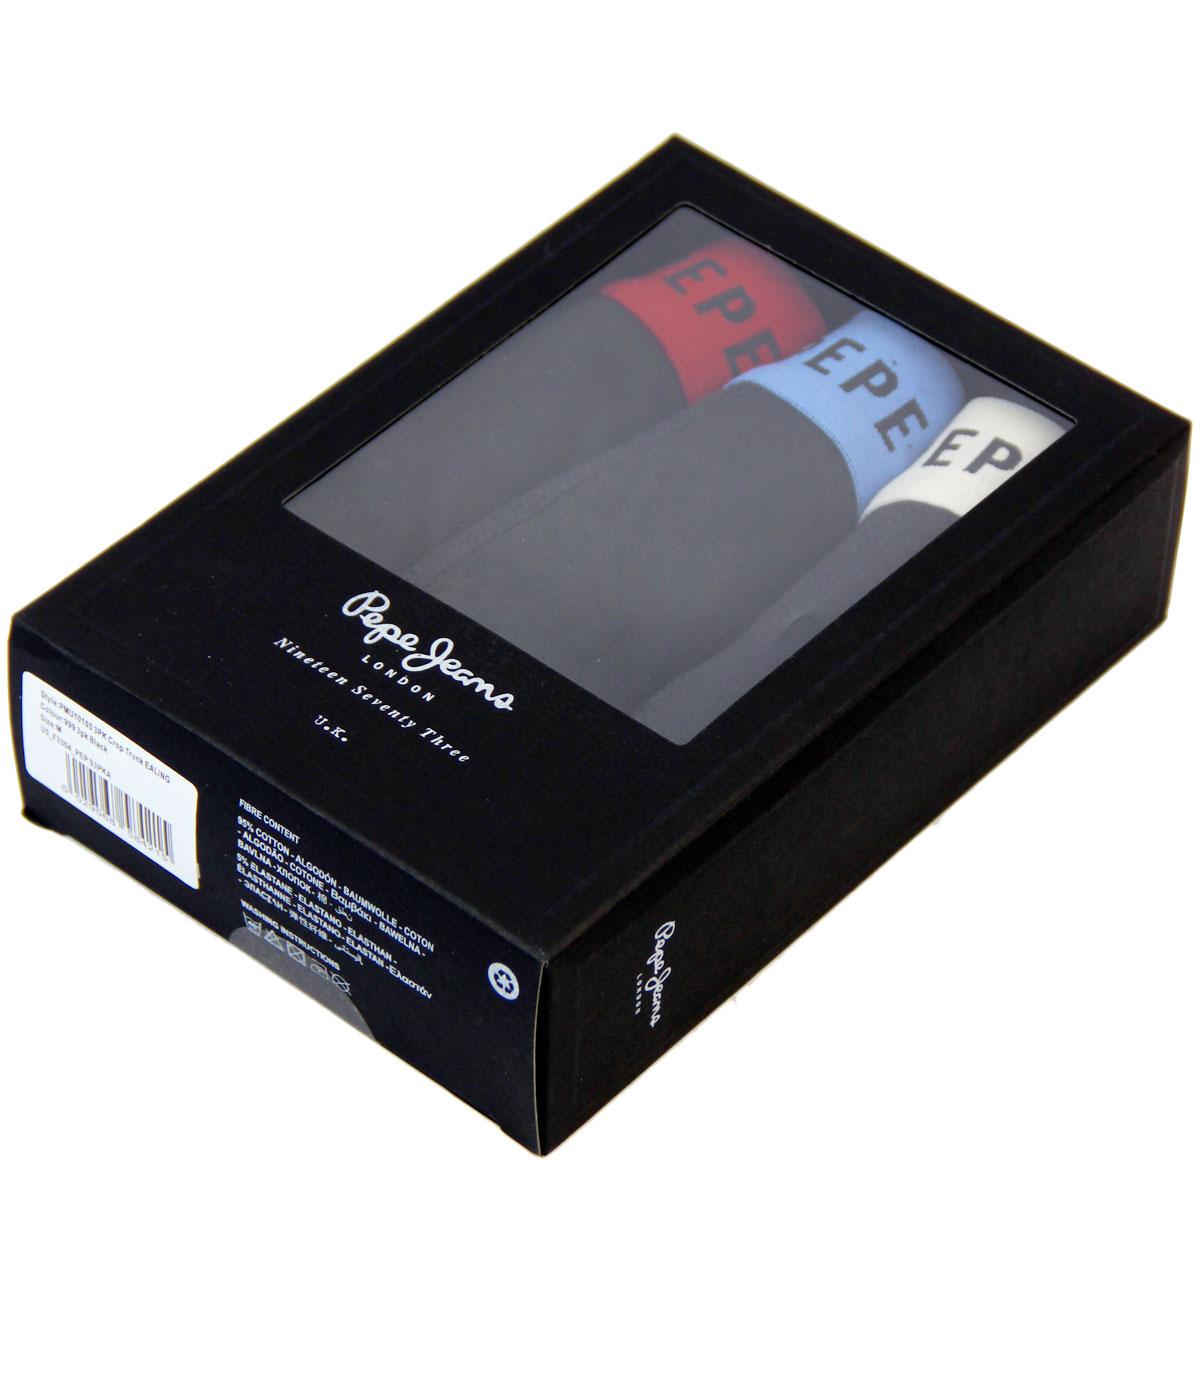 PEPE JEANS Ealing Retro 3 Pack Boxer Shorts Gift Set in Black